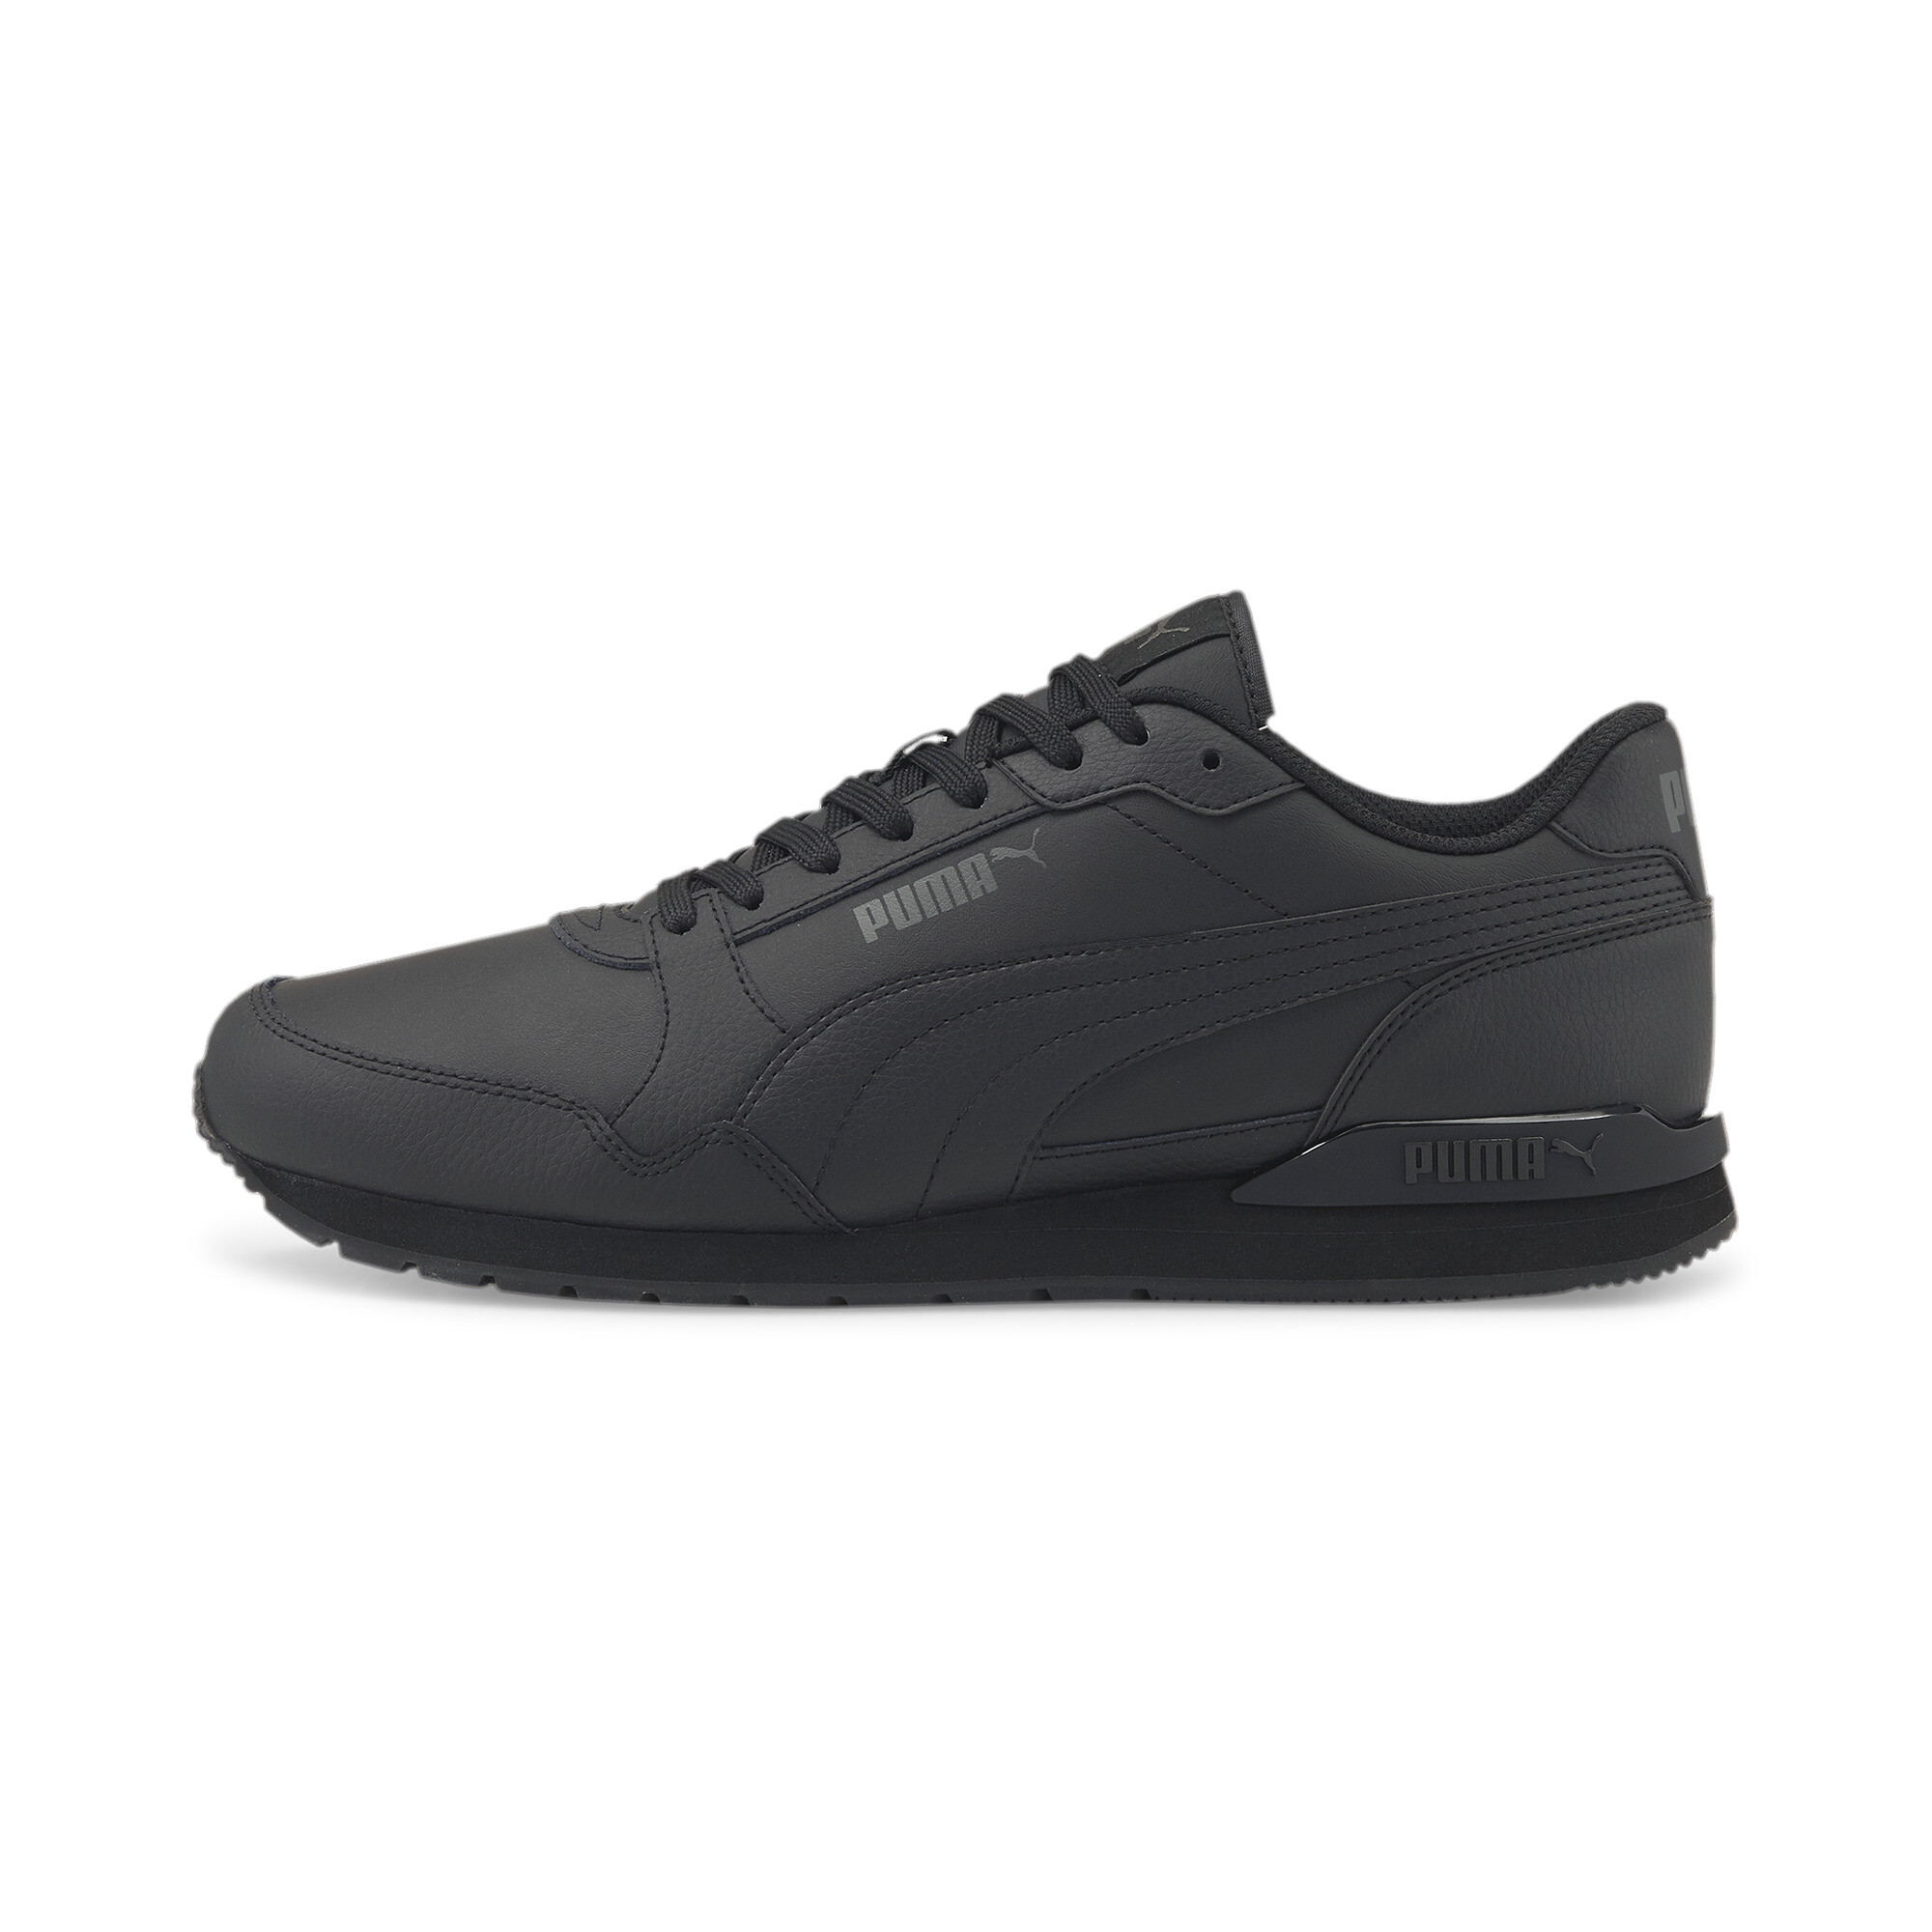 Puma ST Runner V3 L Trainers, Black, Size 45, Shoes